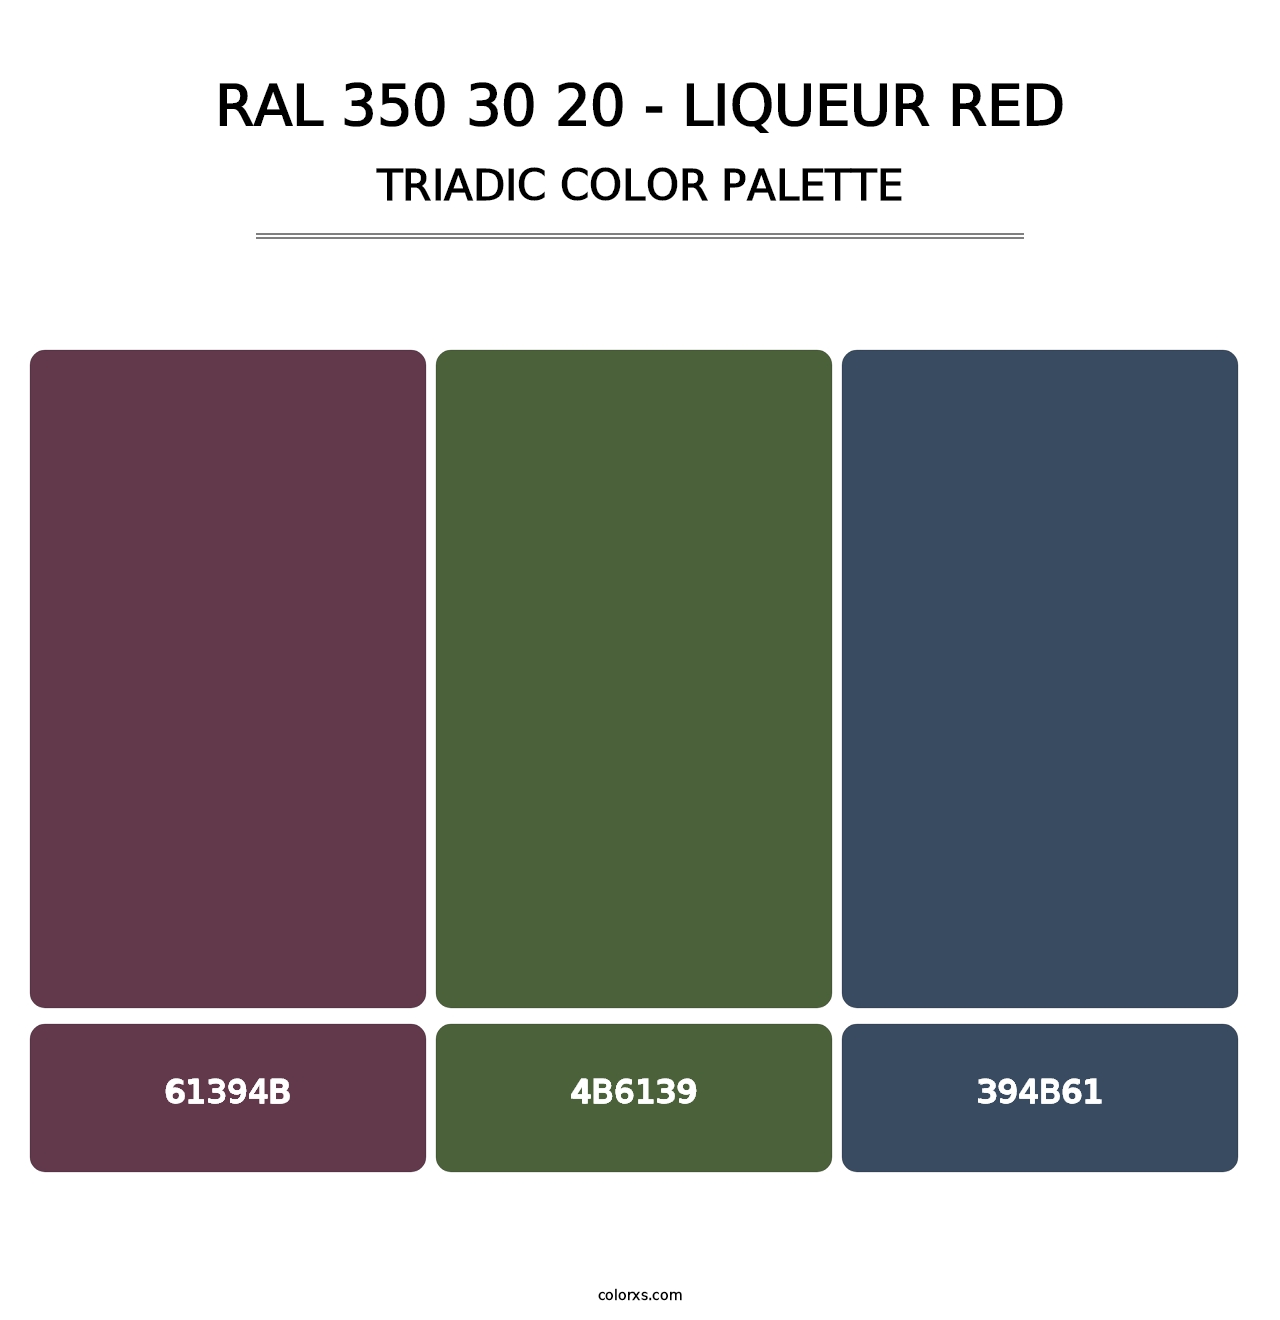 RAL 350 30 20 - Liqueur Red - Triadic Color Palette